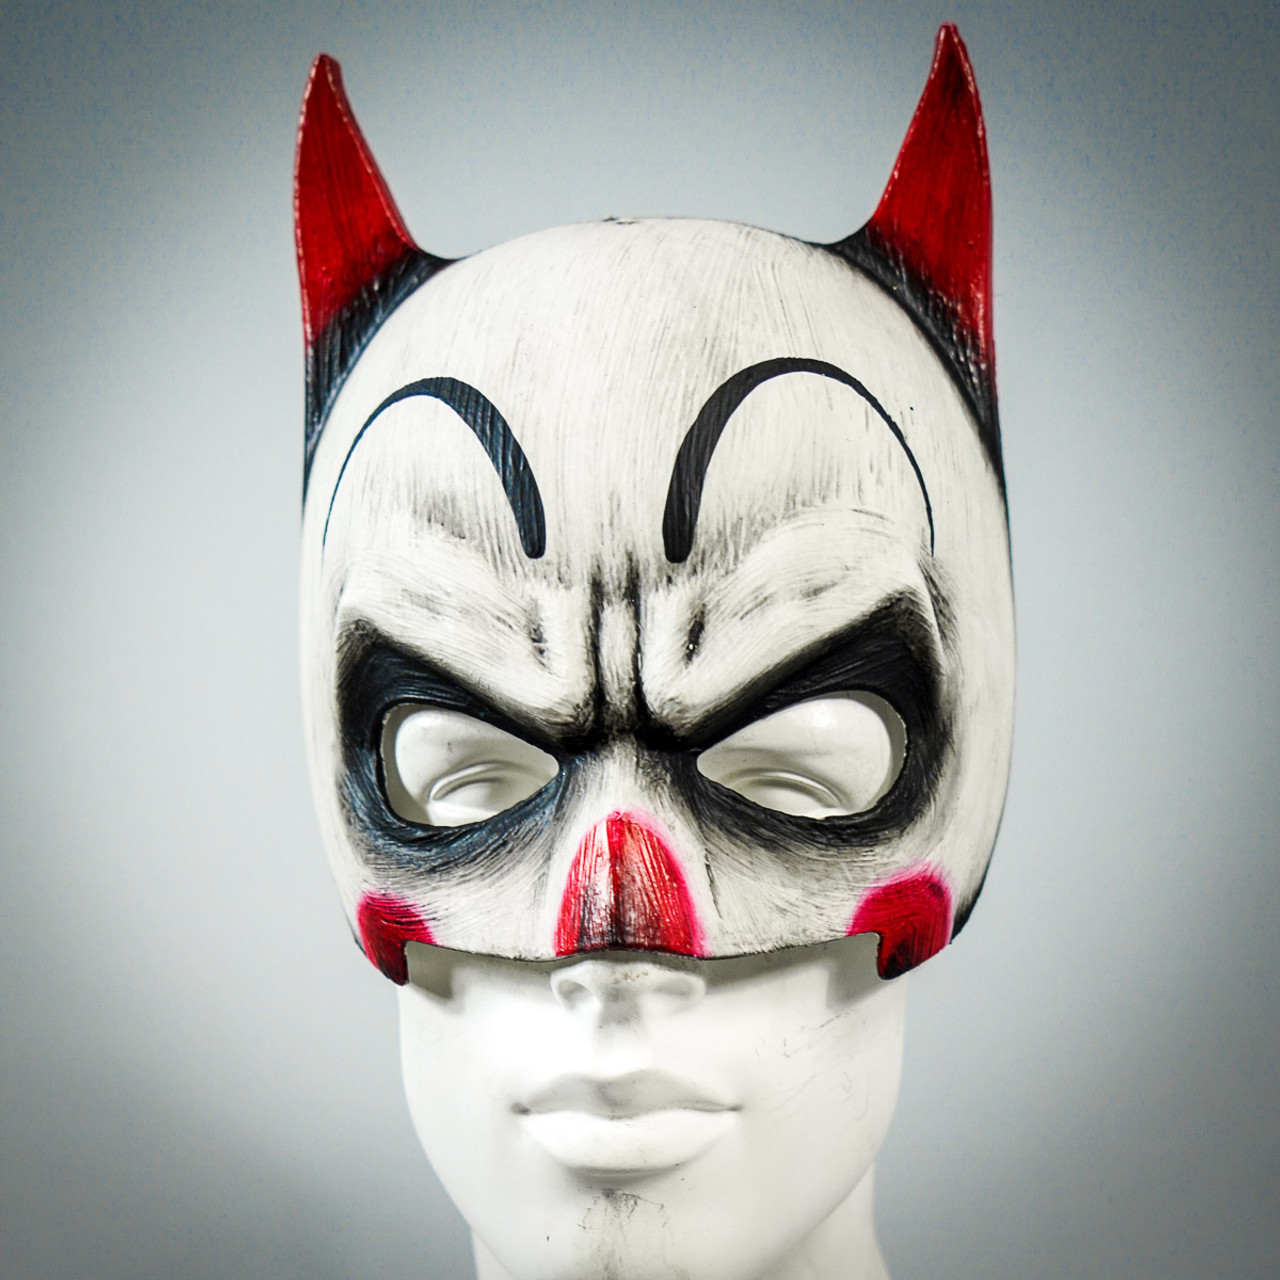 New Scary Halloween Face Mask Clown Batman Mask US FREE SHIP